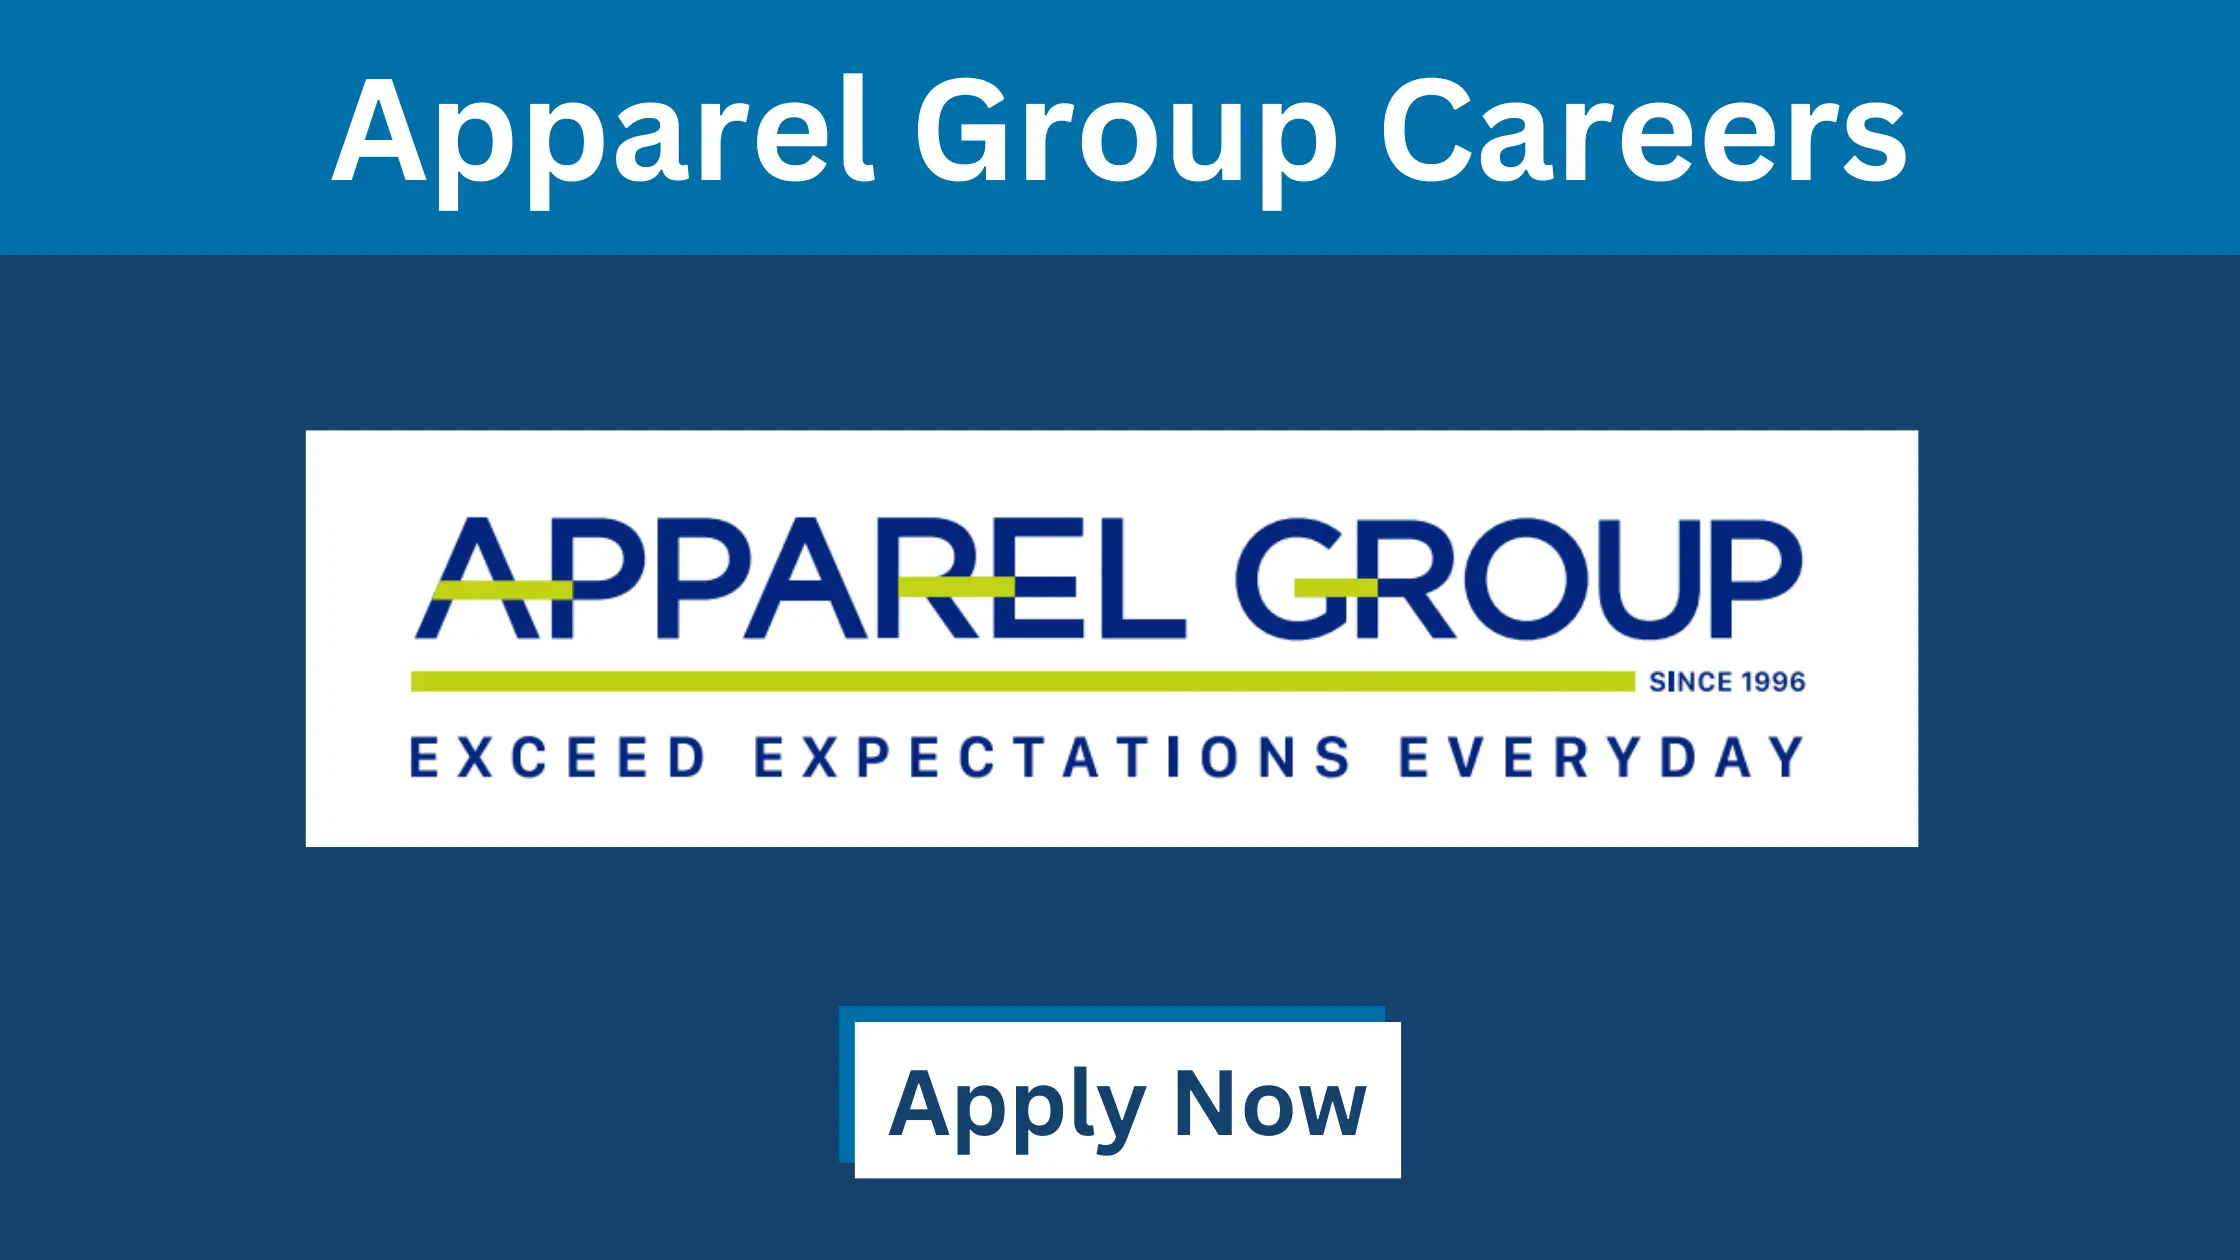 Apparel Group Careers in Dubai